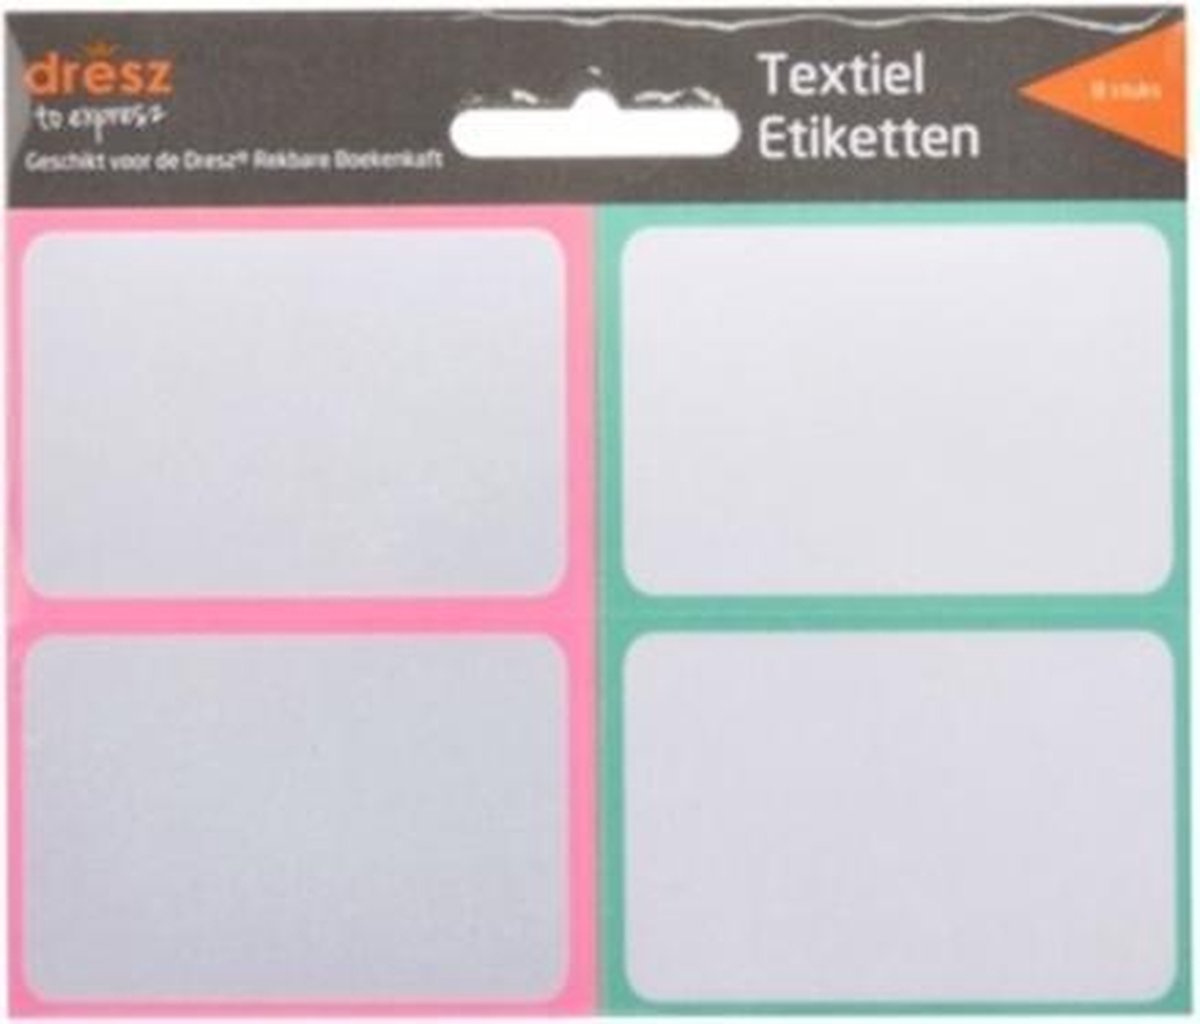 Dresz Etiketten Textiel 7 X Cm Wit/roze/mintgroen 8 Stuks | bol.com